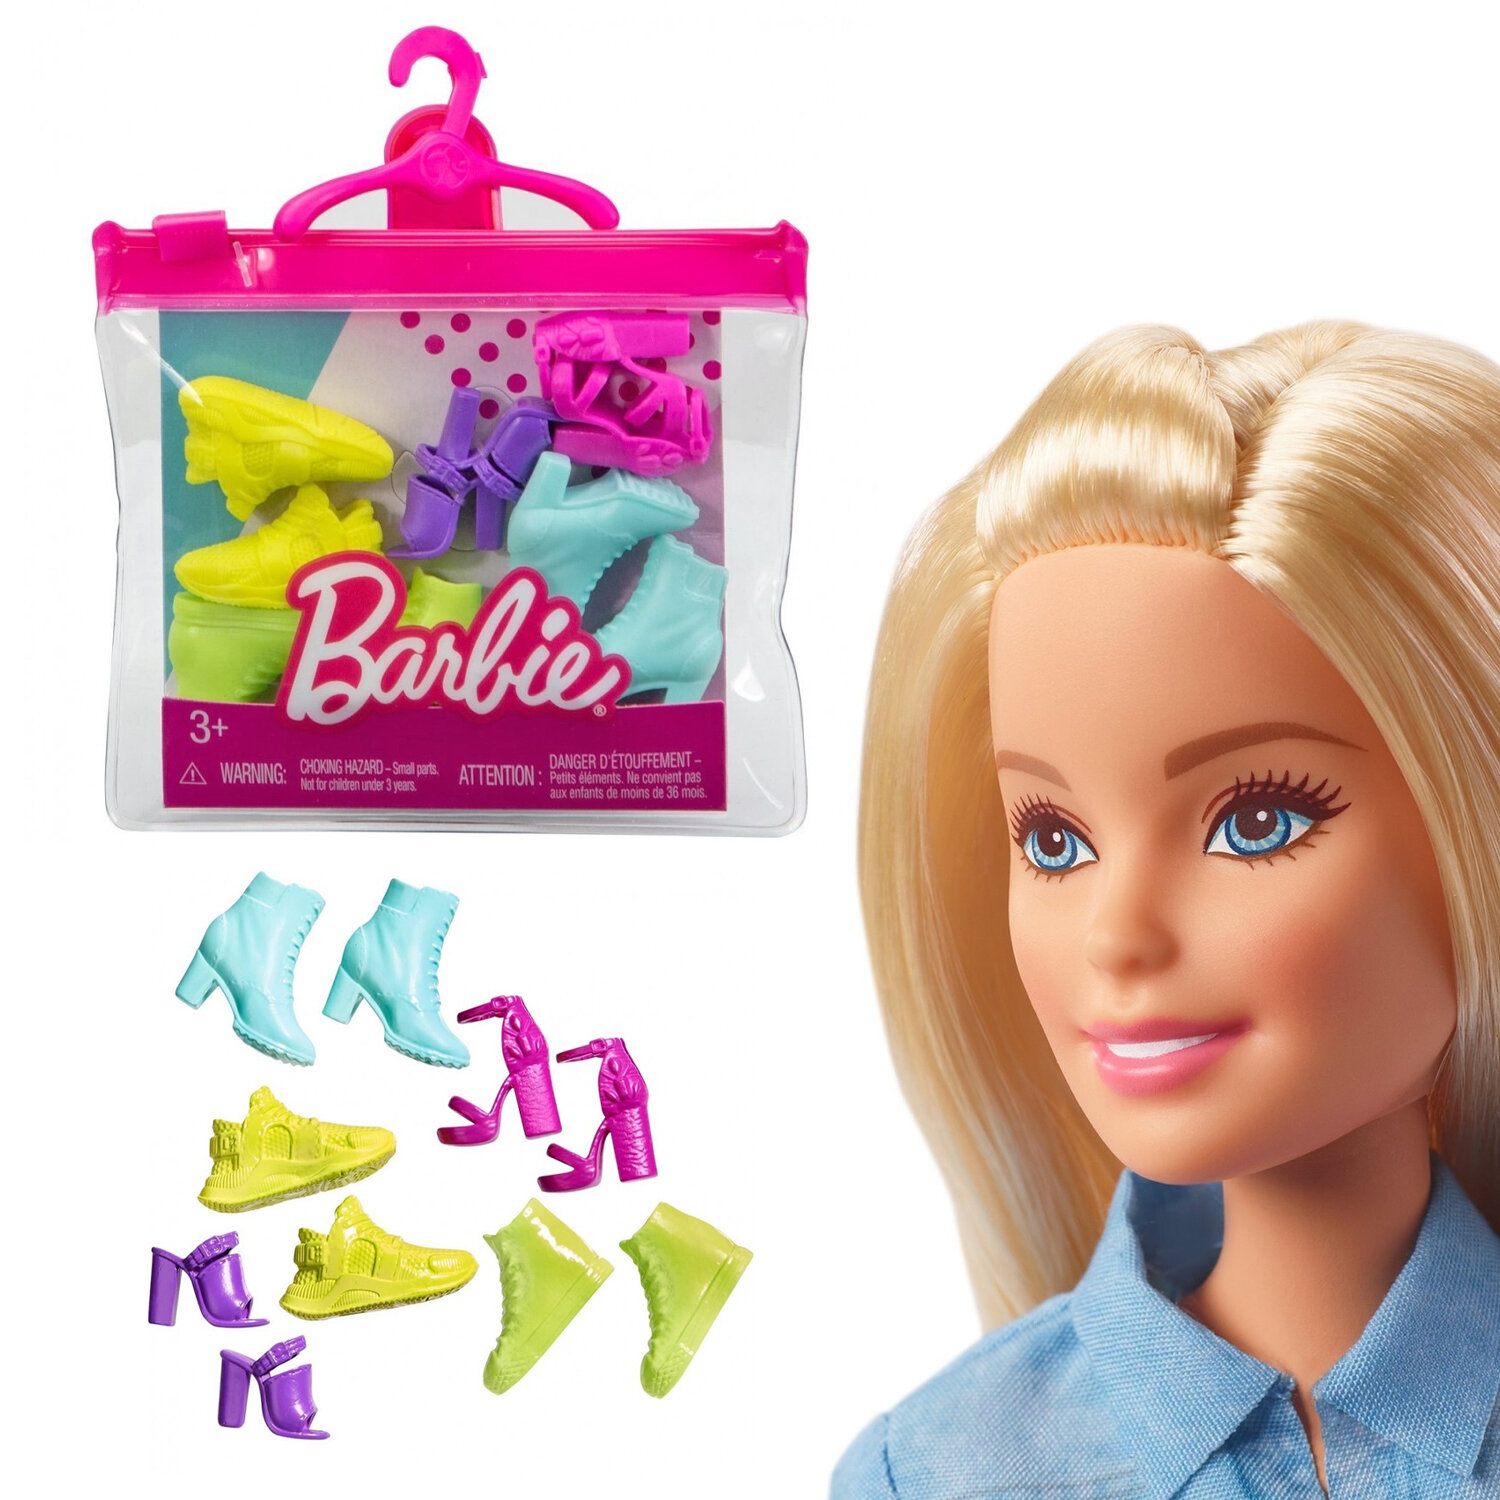 Одежда для кукол Самая модная обувь для кукол Барби Barbie, Mattel, набор 5 пар